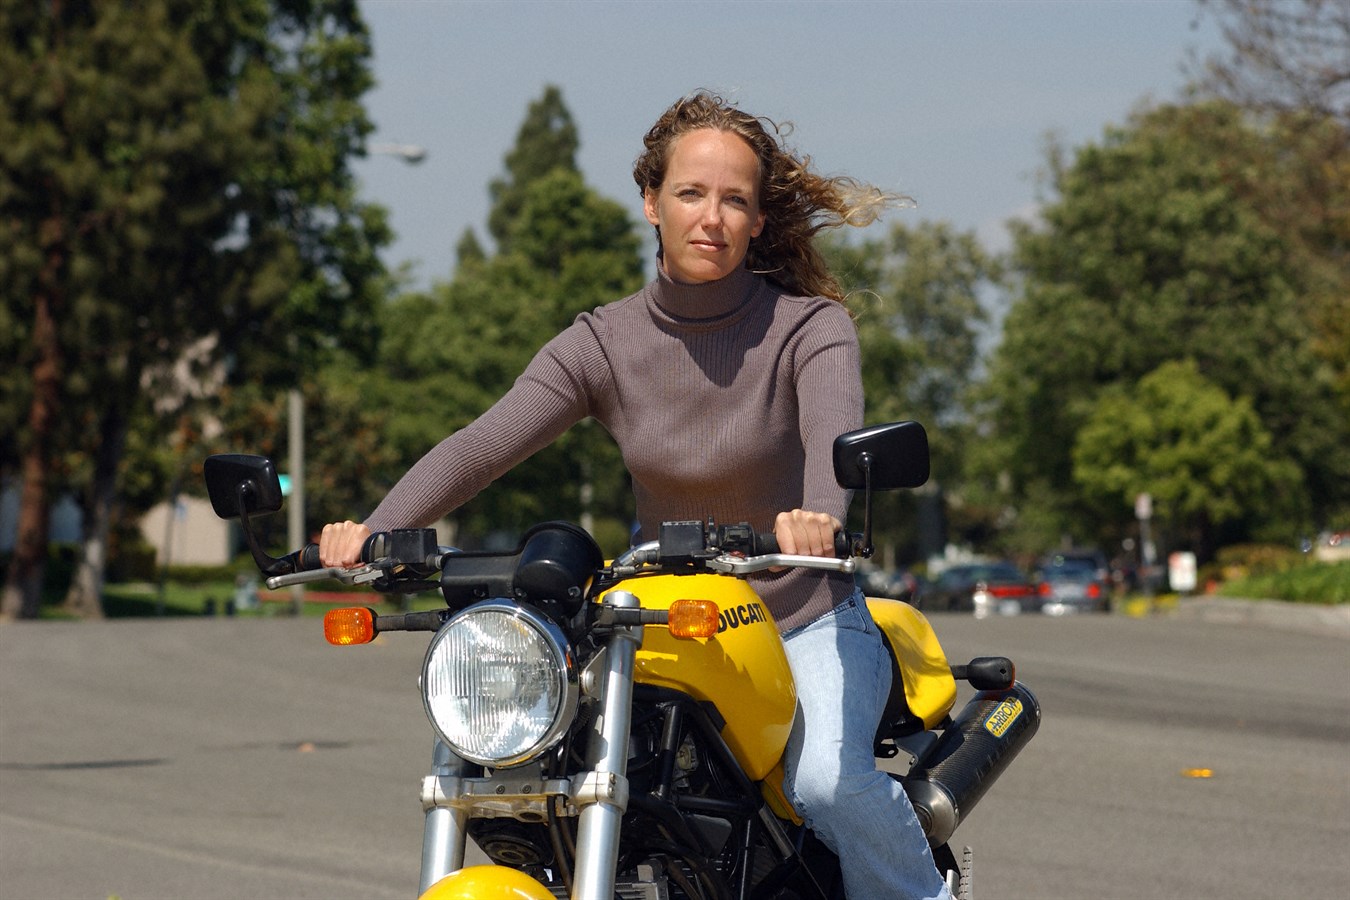 Tisha Johnson on her bike outside VMCC, Volvo Monitoring Center Camarillo in  California